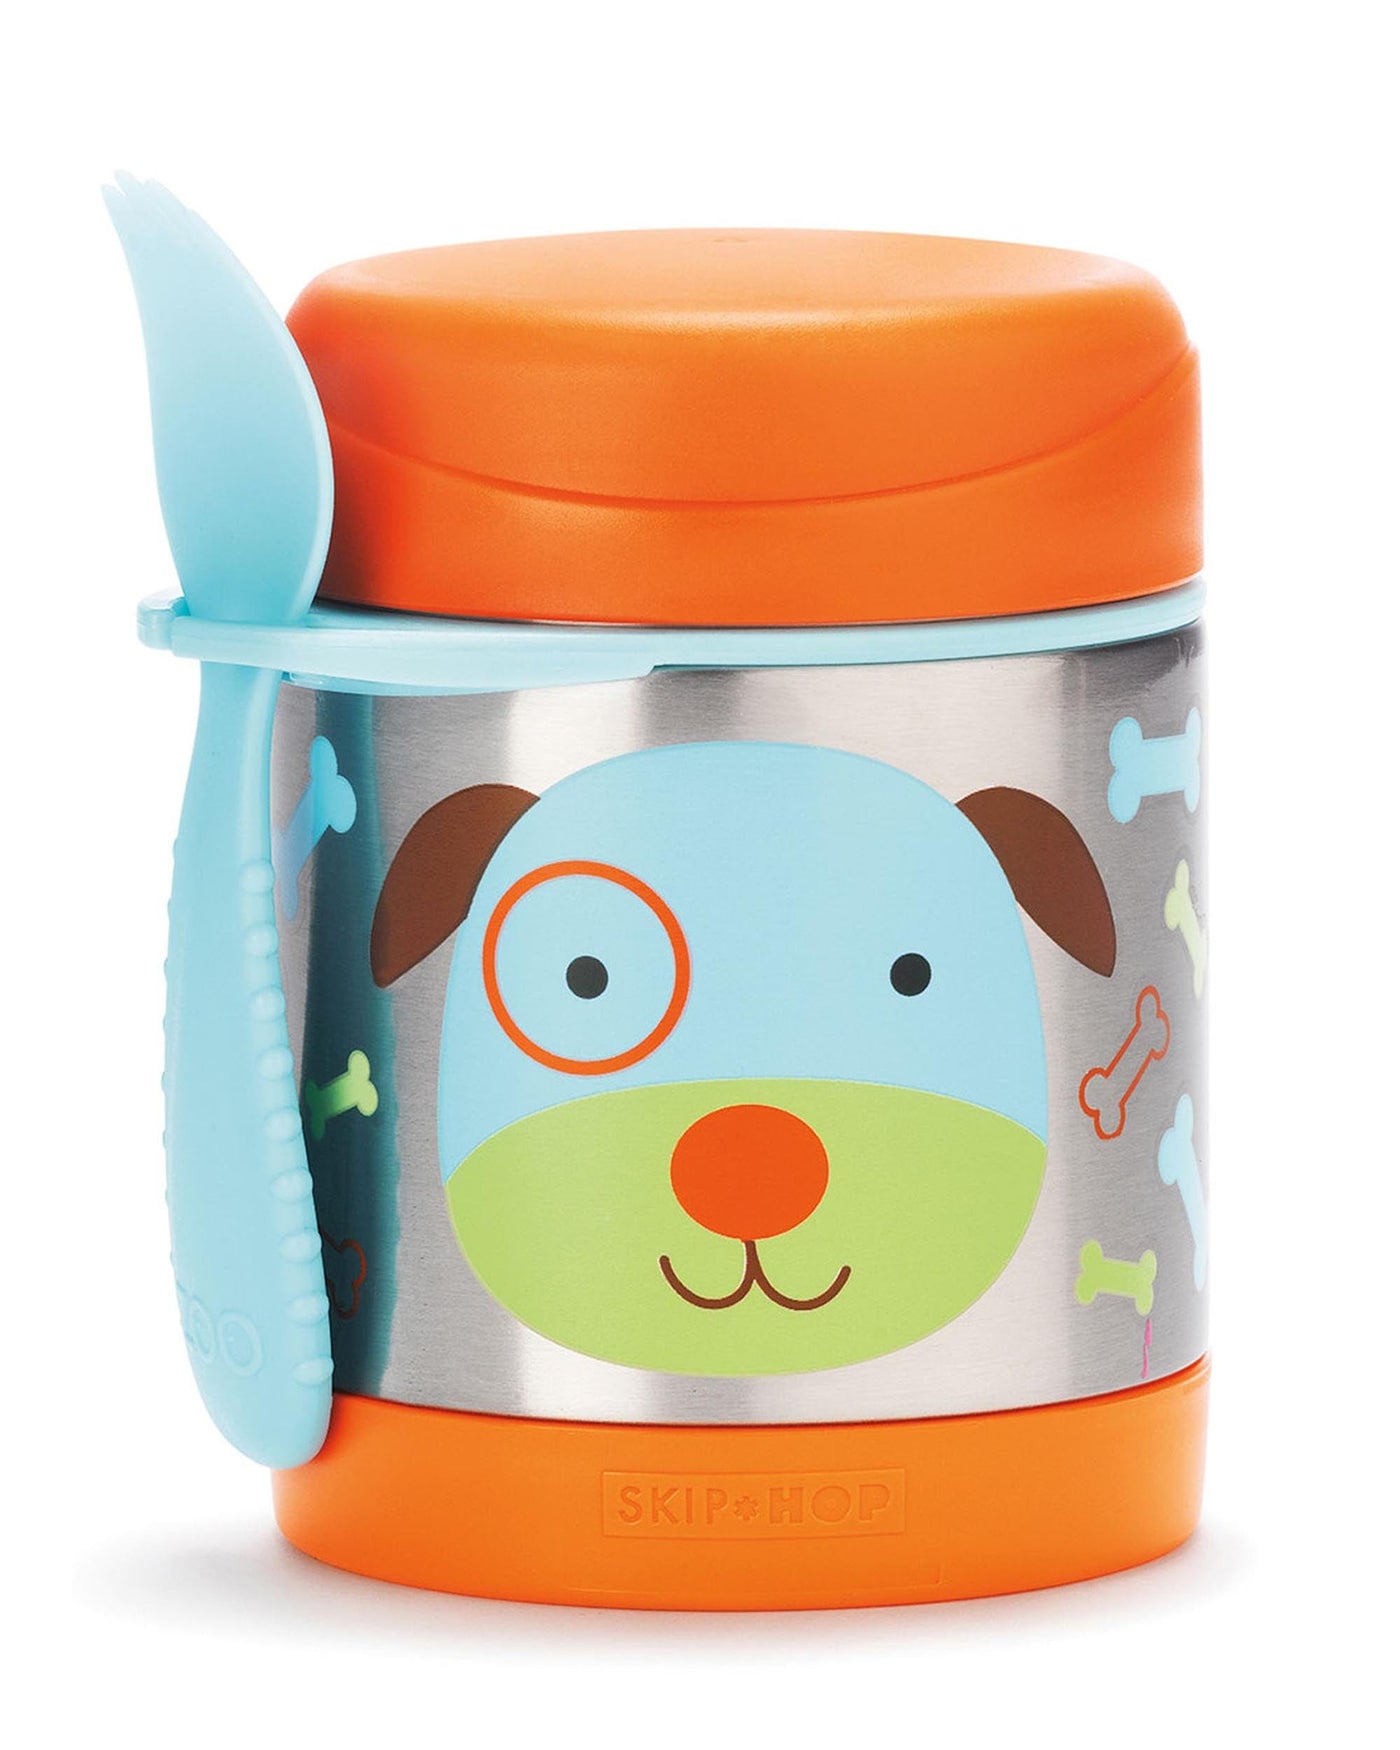 Zoo: Darby Dog - Insulated Food Jar | Skip Hop by Skip Hop, USA Baby Care